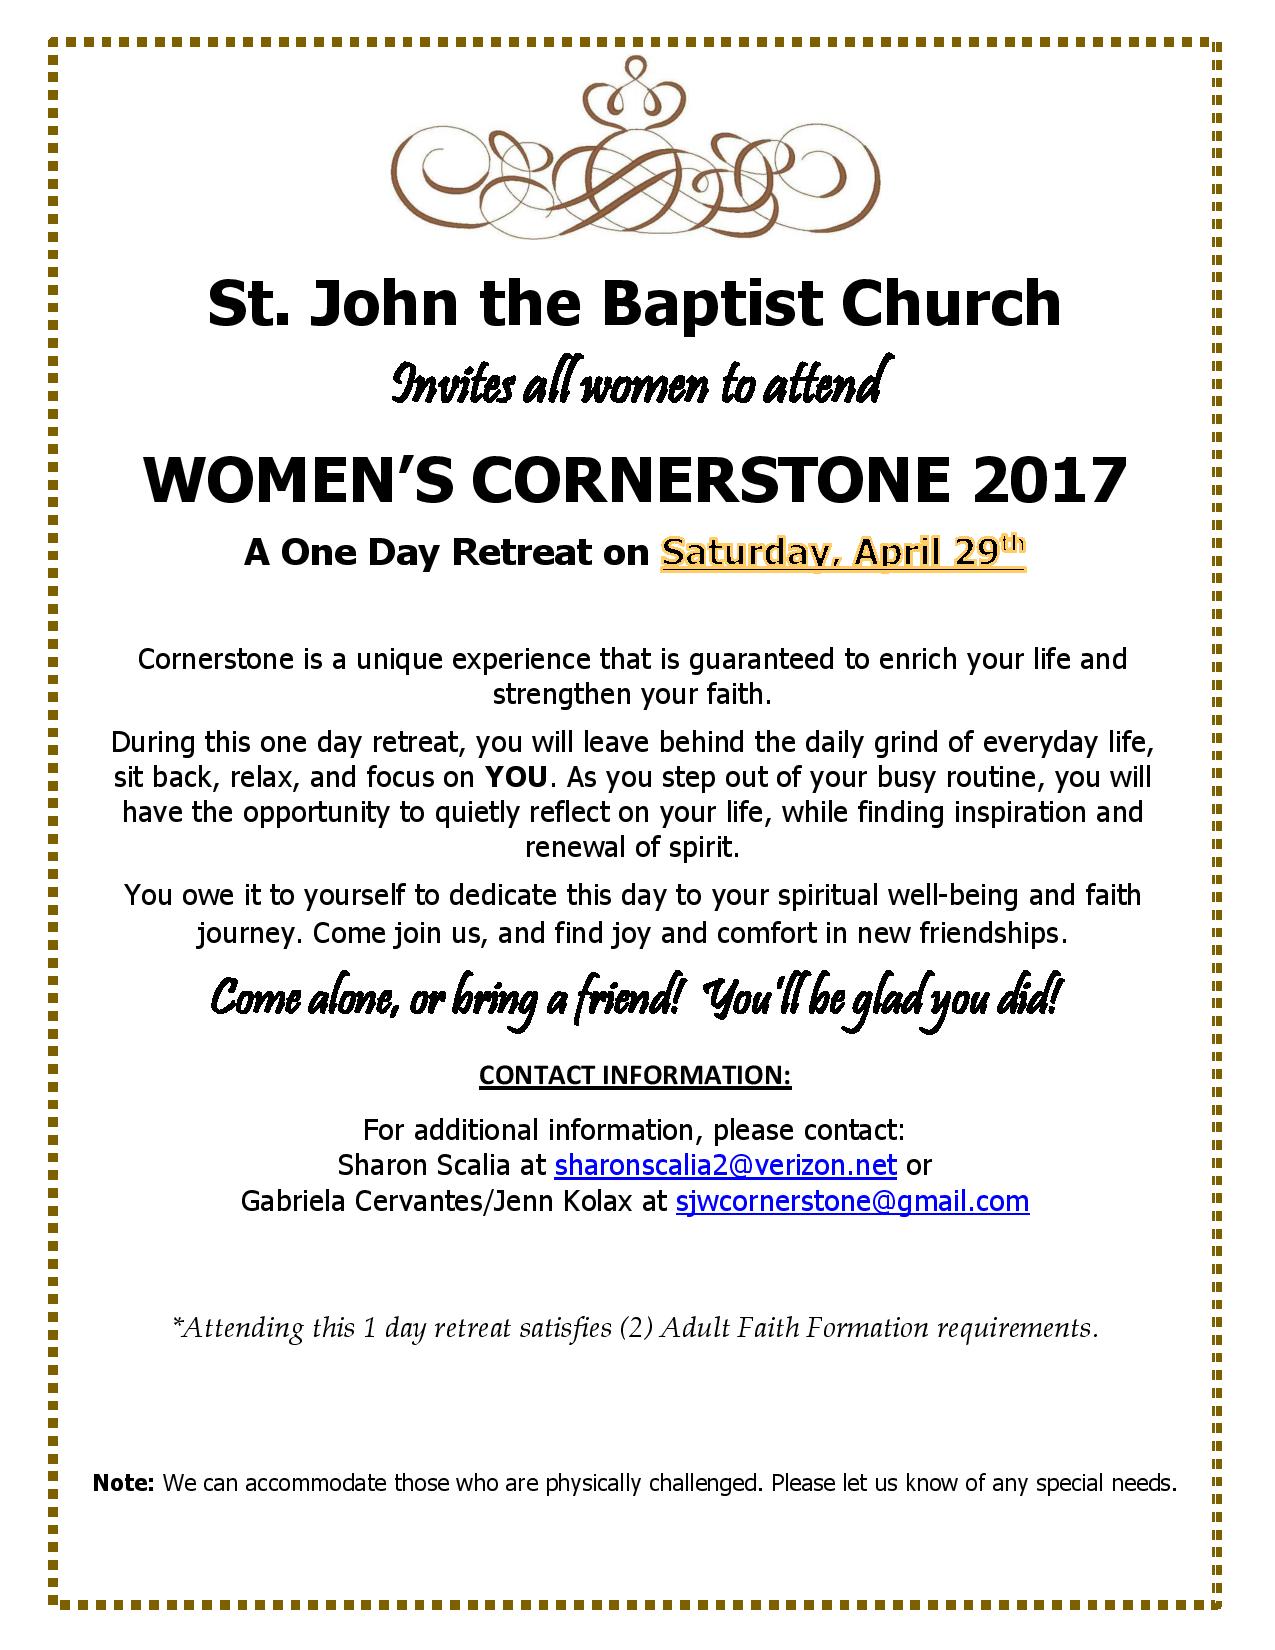 Cornerstone 2017 Flyer-page-001